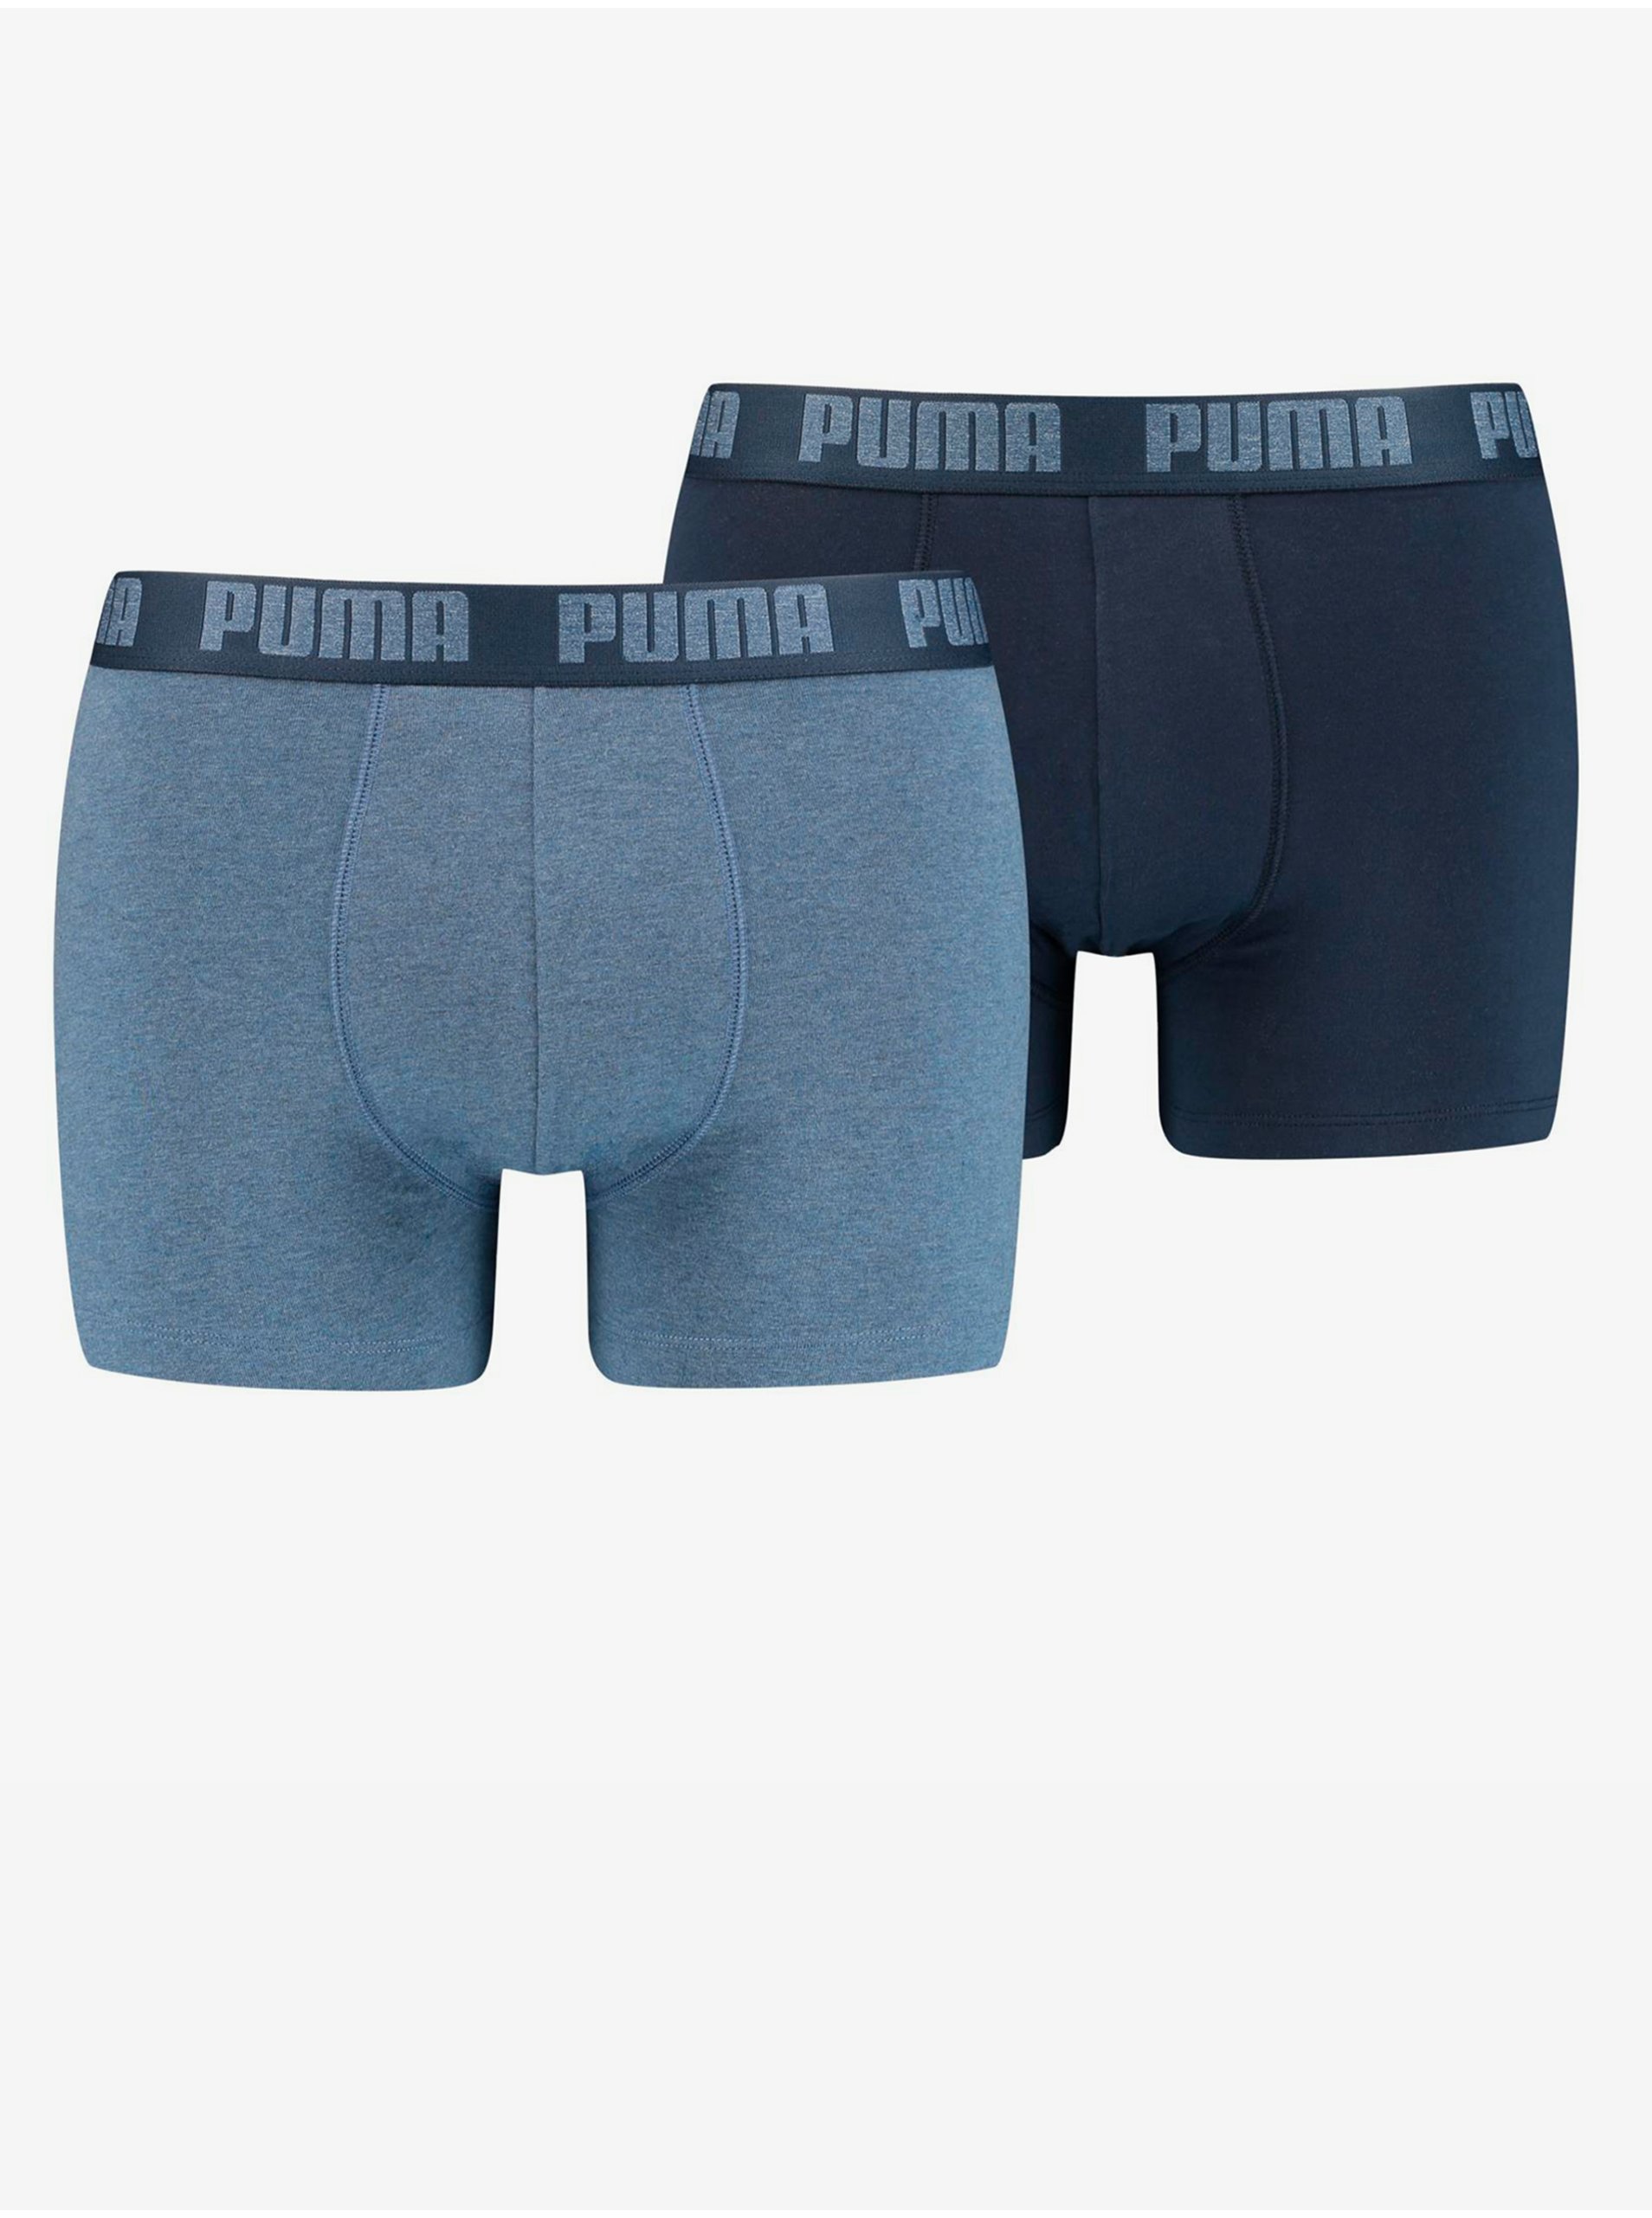 Set of two men's boxers in Puma blue - Men's